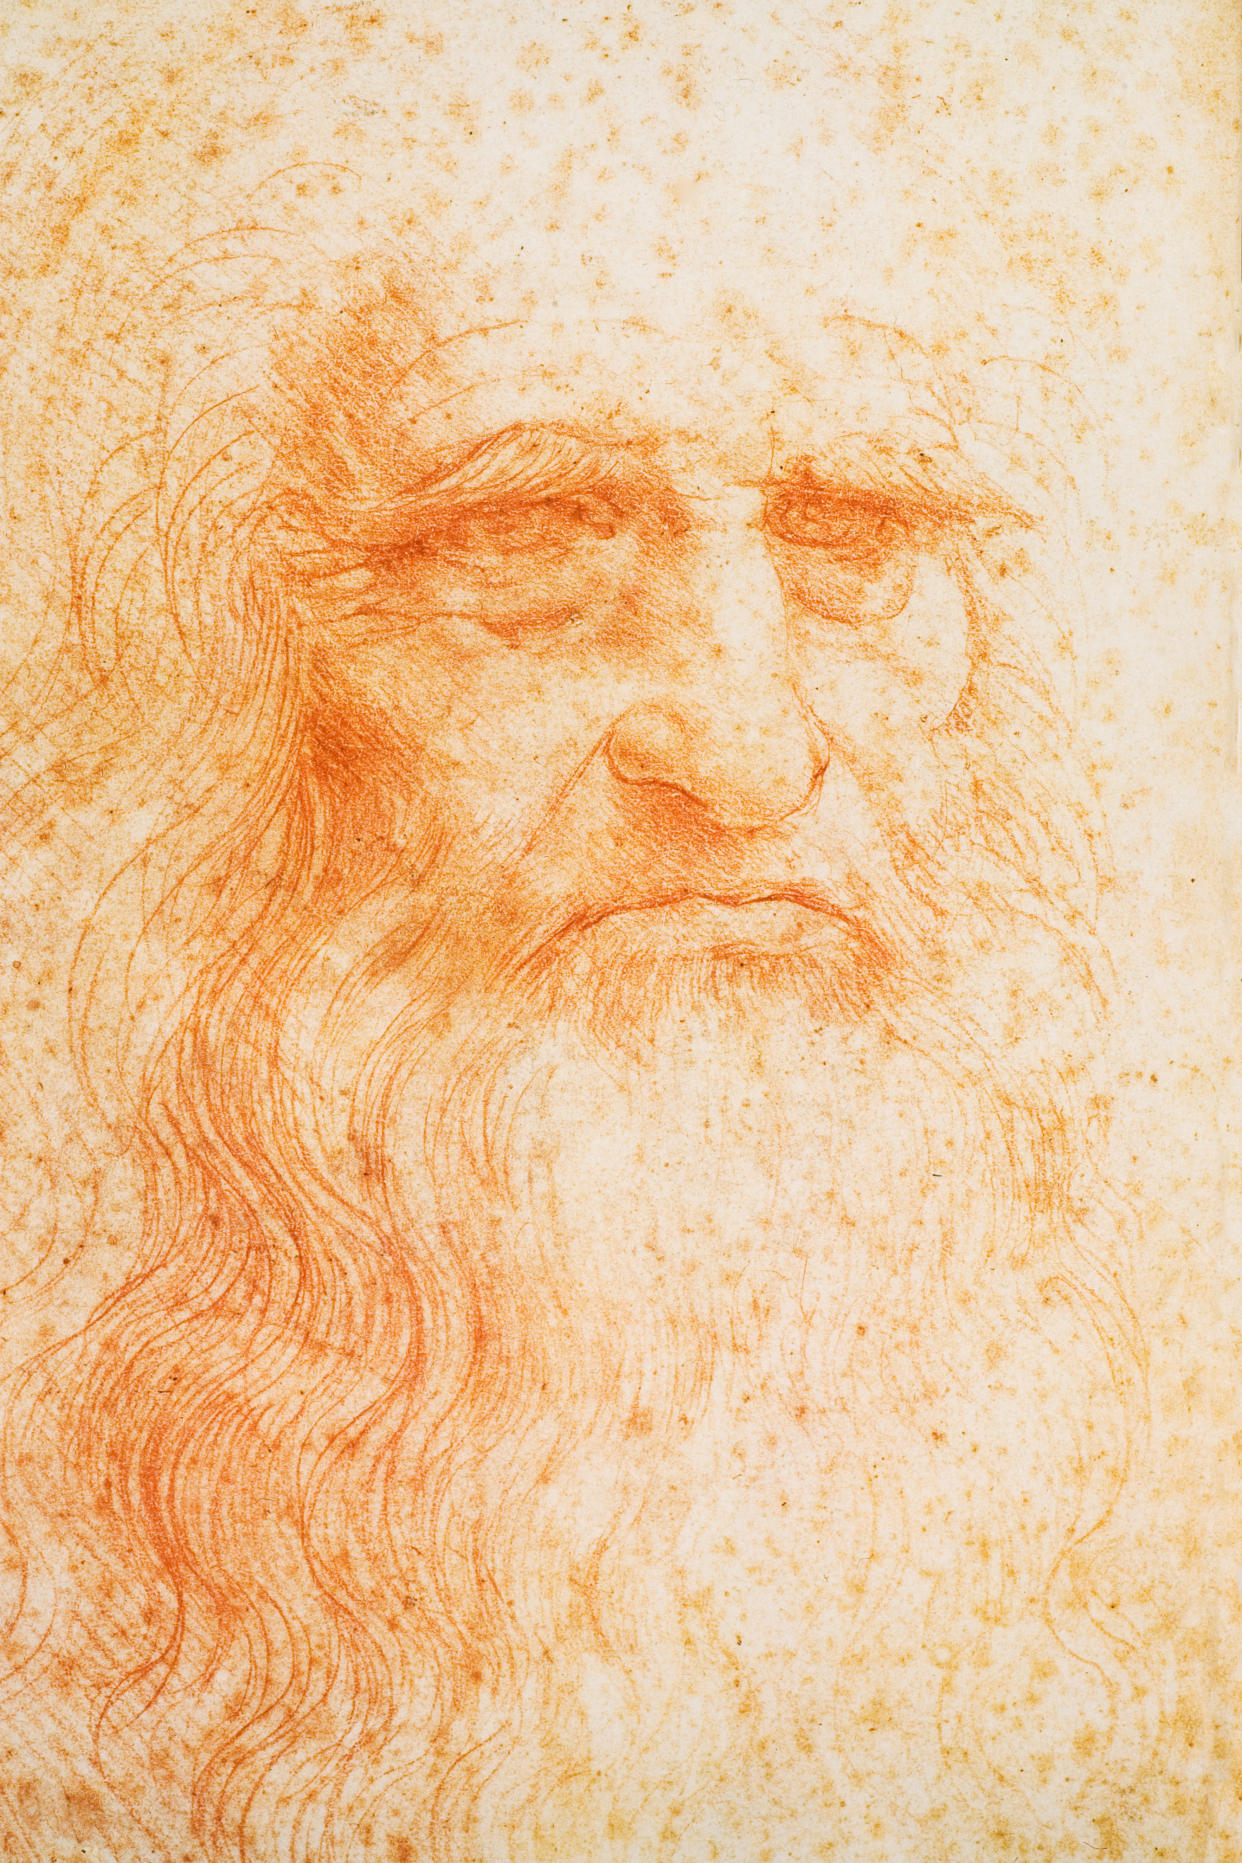 Self portrait of Leonardo da Vinci, drawing in red chalk